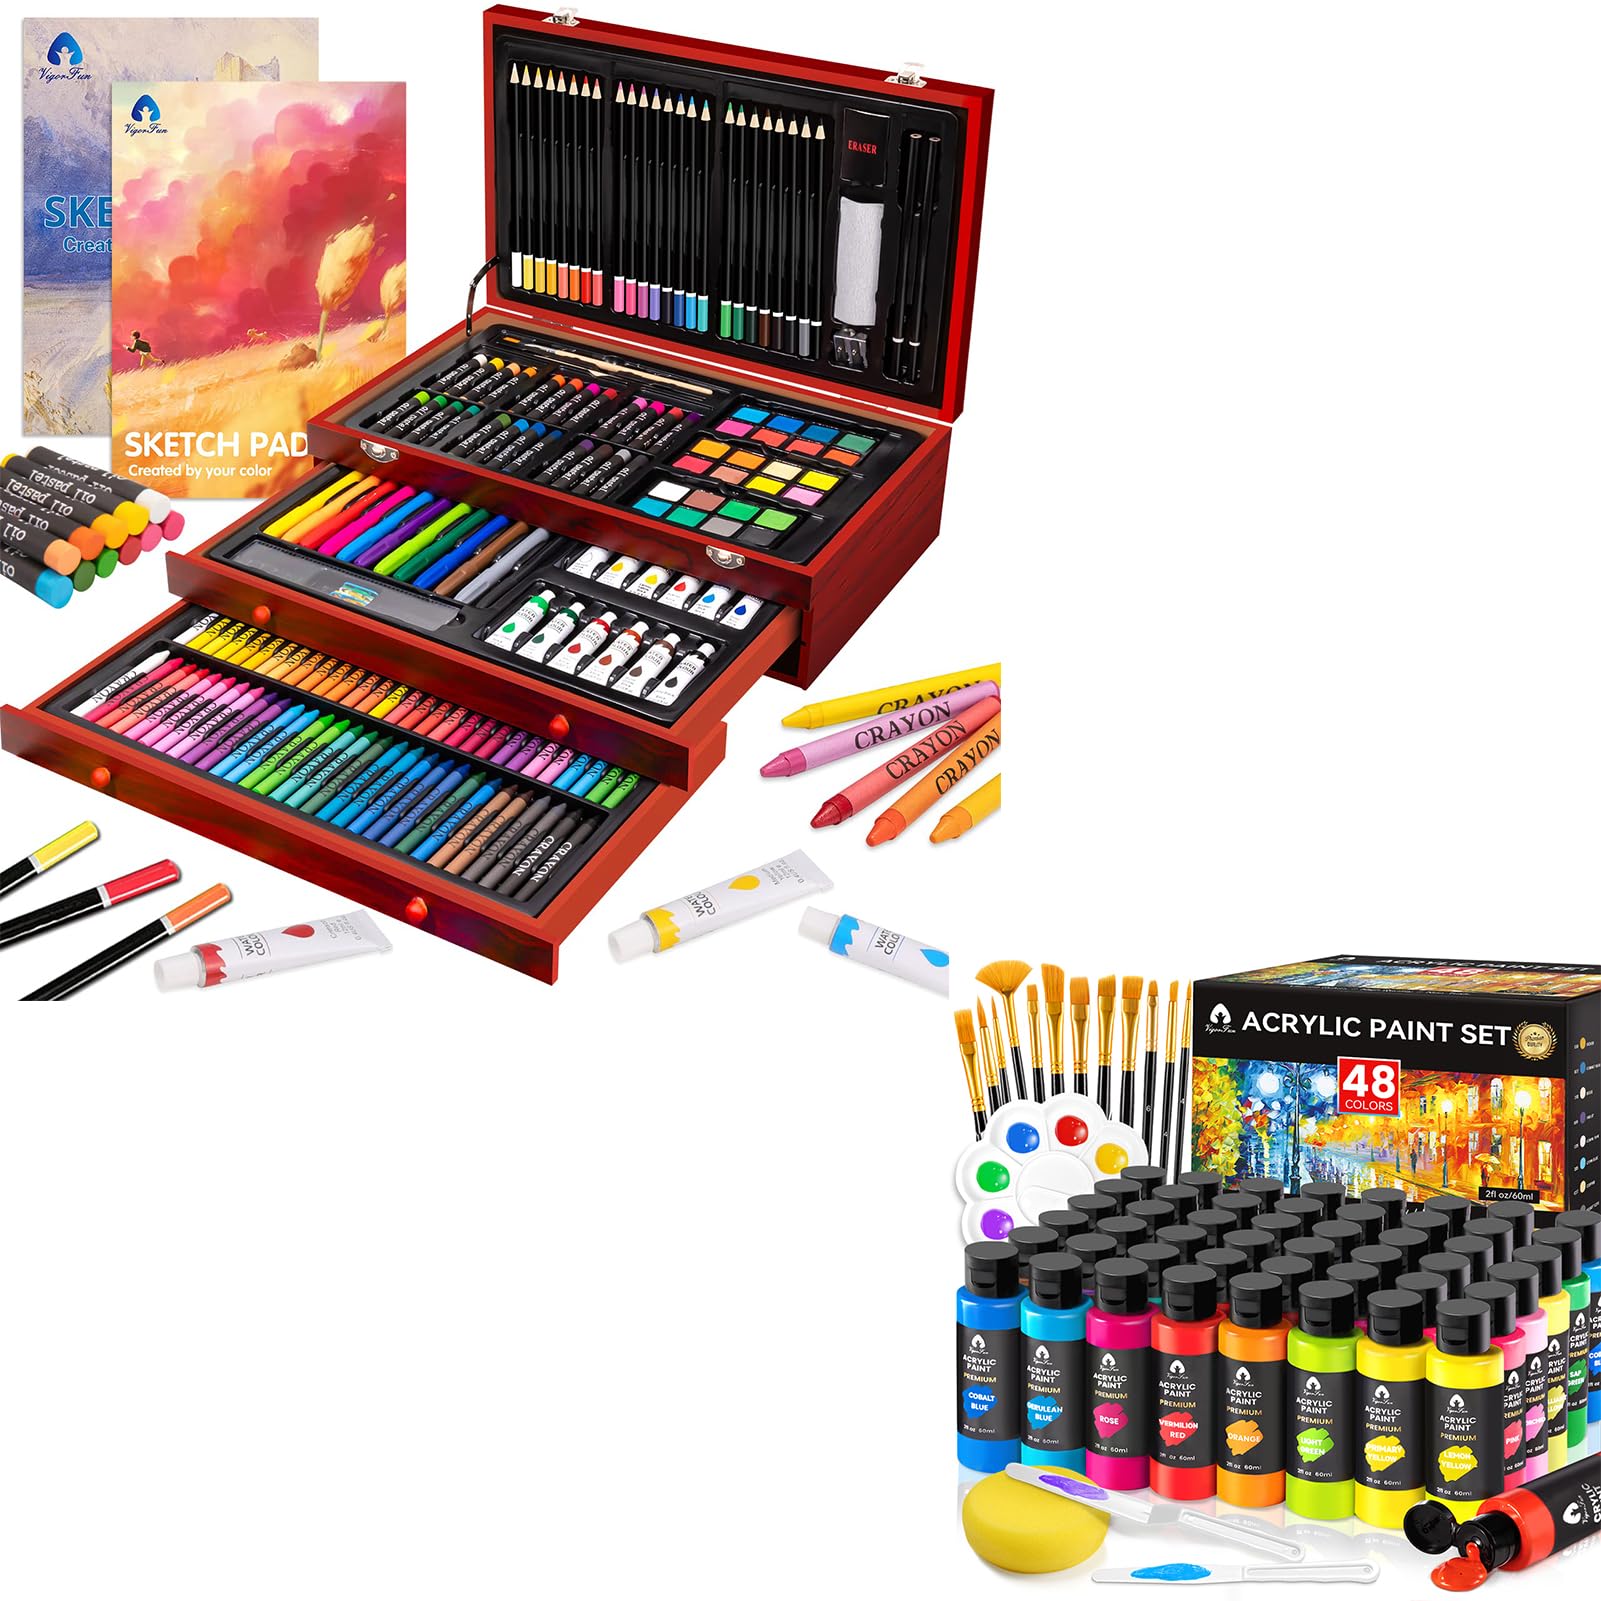 VigorFun Art Supplies, 170-Piece Deluxe Wooden Art Set Crafts Kit with Oil Pastels, Colored Pencils, Watercolor Paint, Acrylic Paint, Oil Paint, Creat